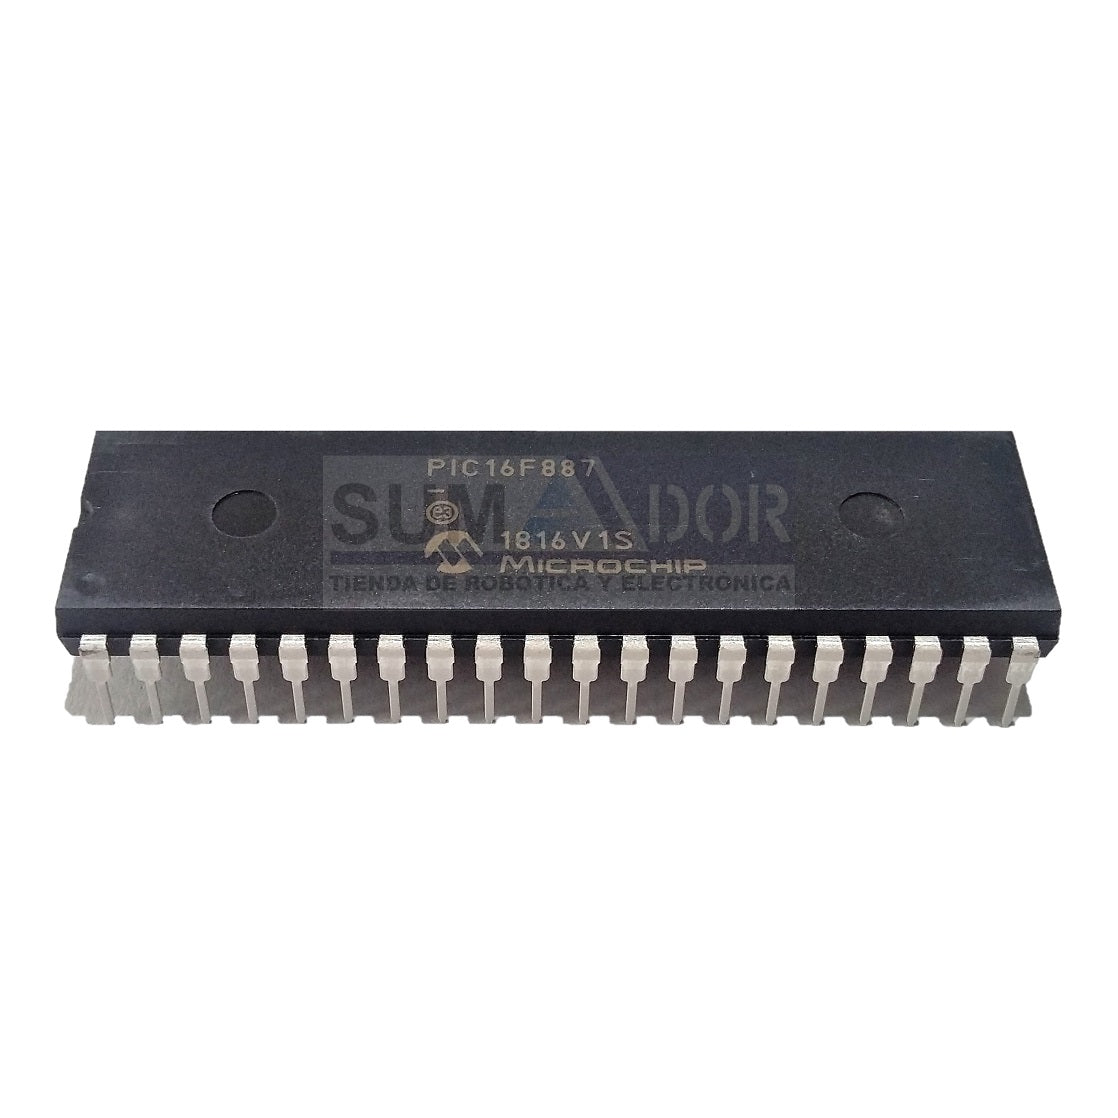 Microcontrolador PIC16F887